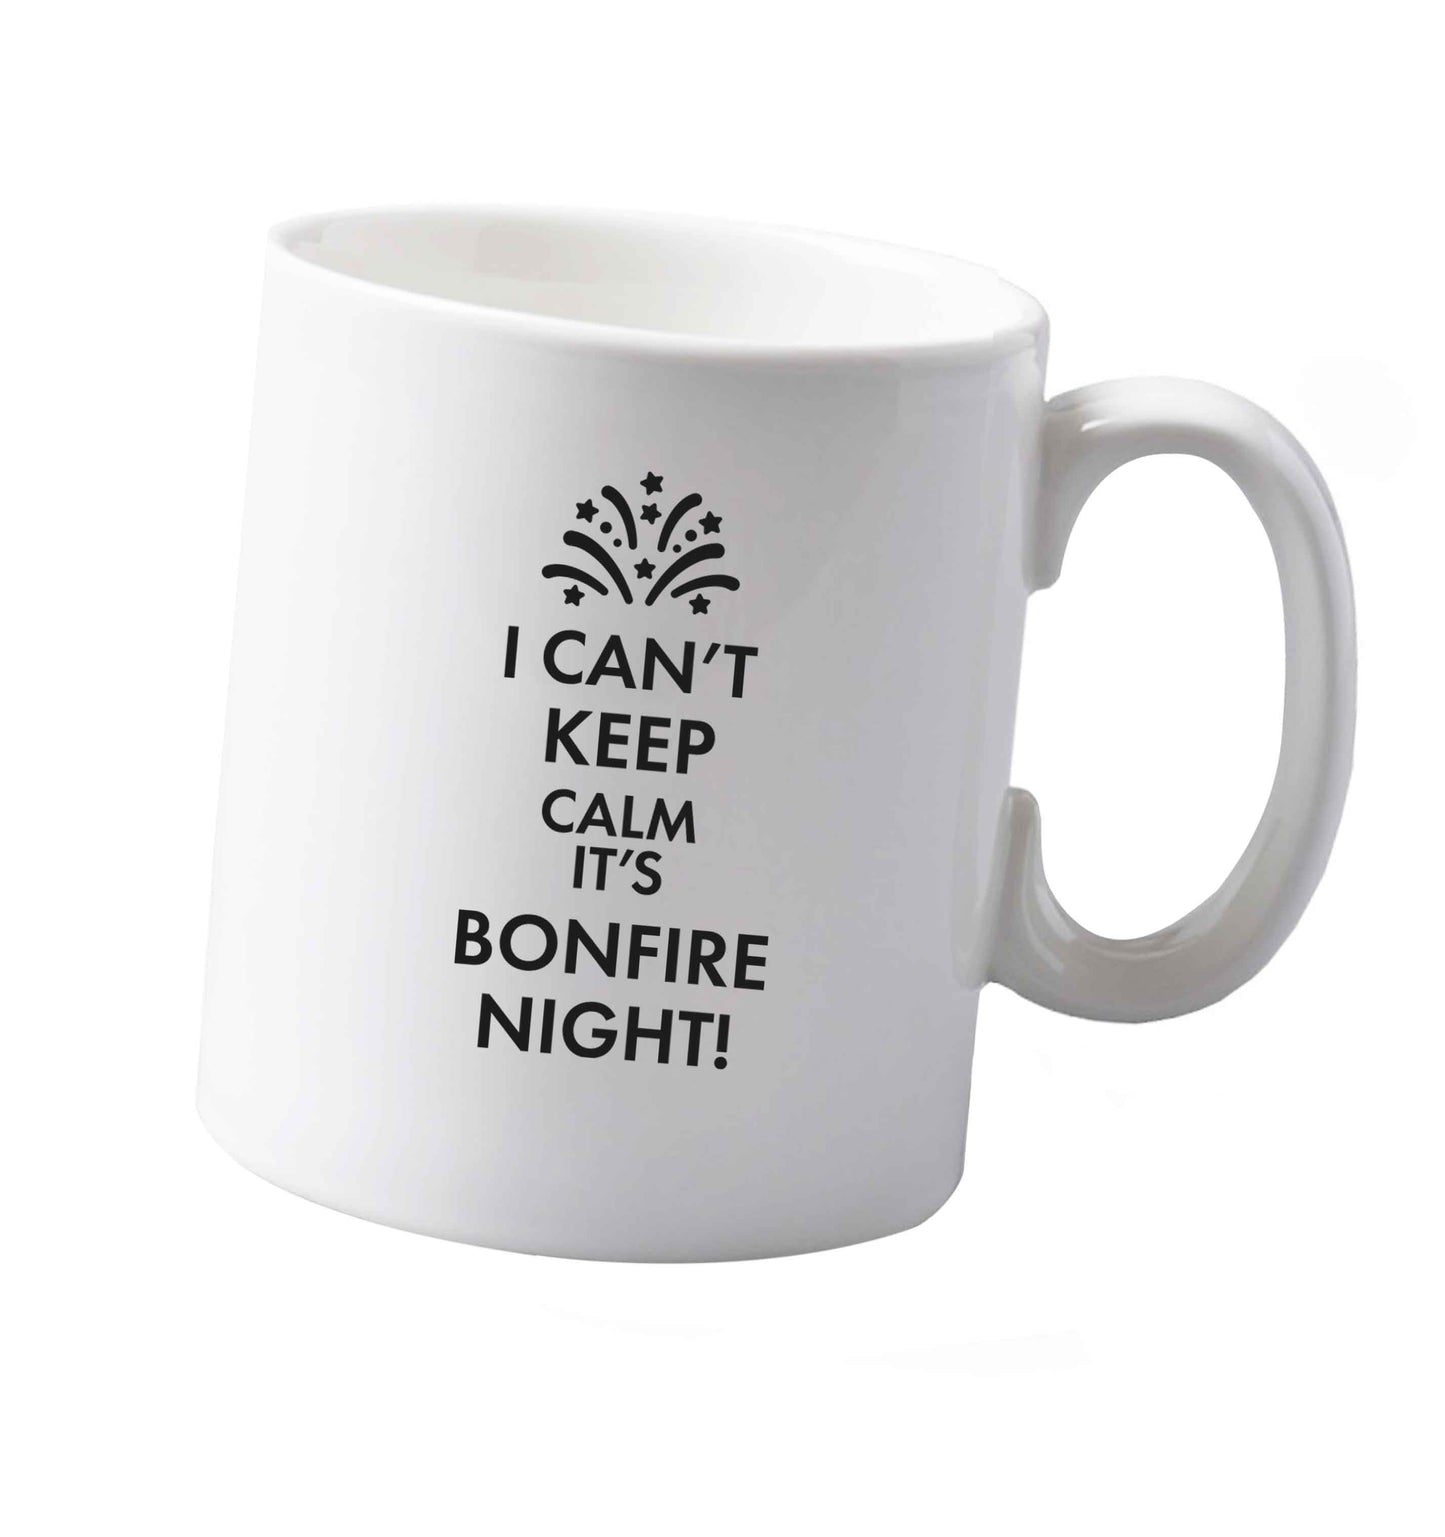 10 oz I can't keep calm its bonfire night ceramic mug both sides